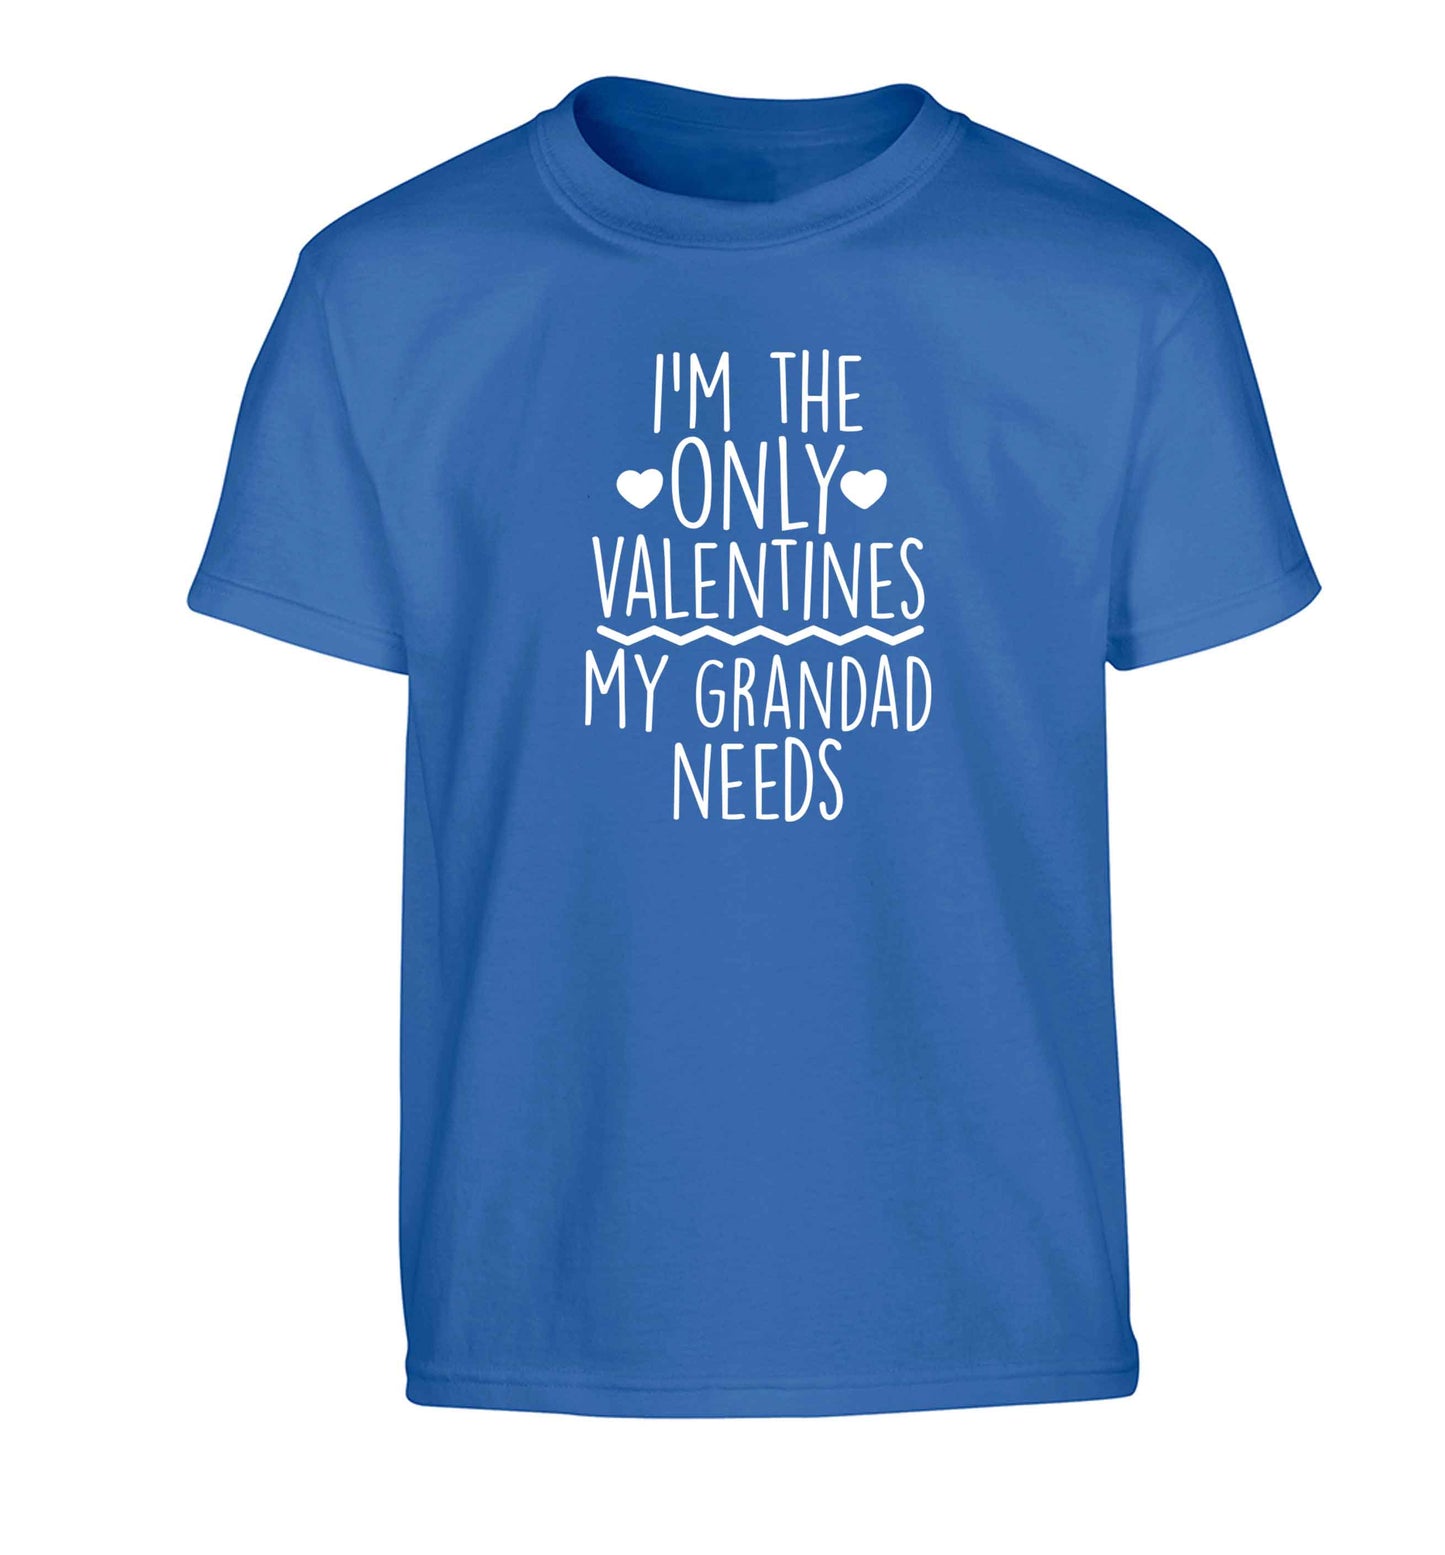 I'm the only valentines my grandad needs Children's blue Tshirt 12-13 Years